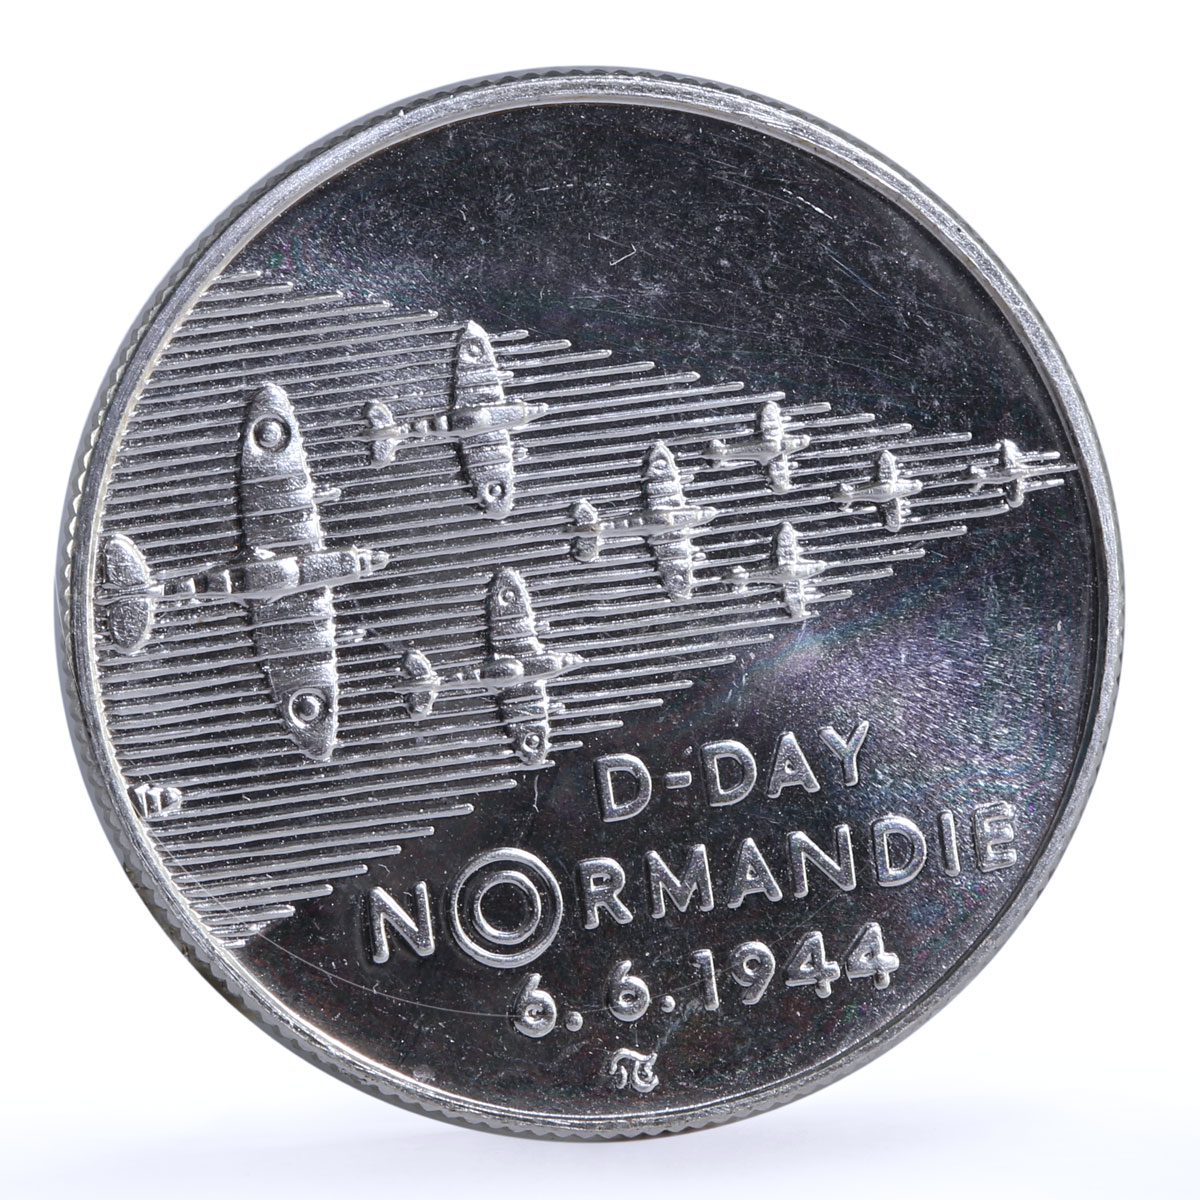 Czech Republic 200 korun Normandy Landings Planes Aviation silver coin 1994